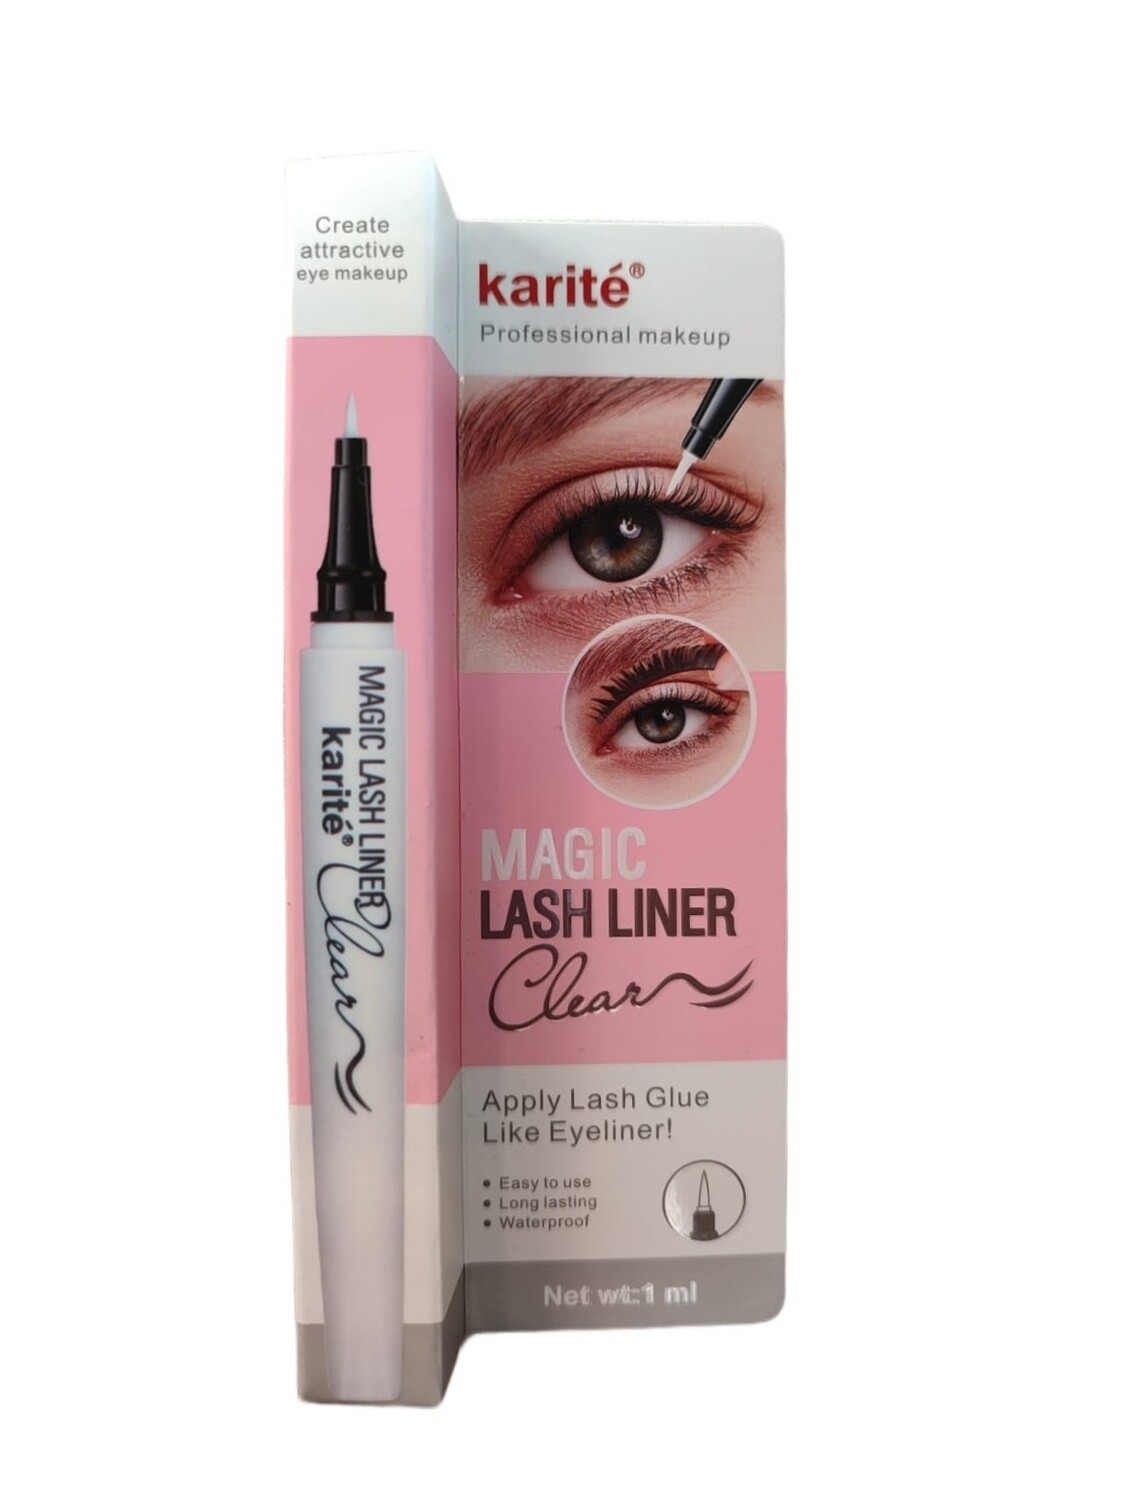 Karite Magic Lash Liner Strip Lash Glue - Clear